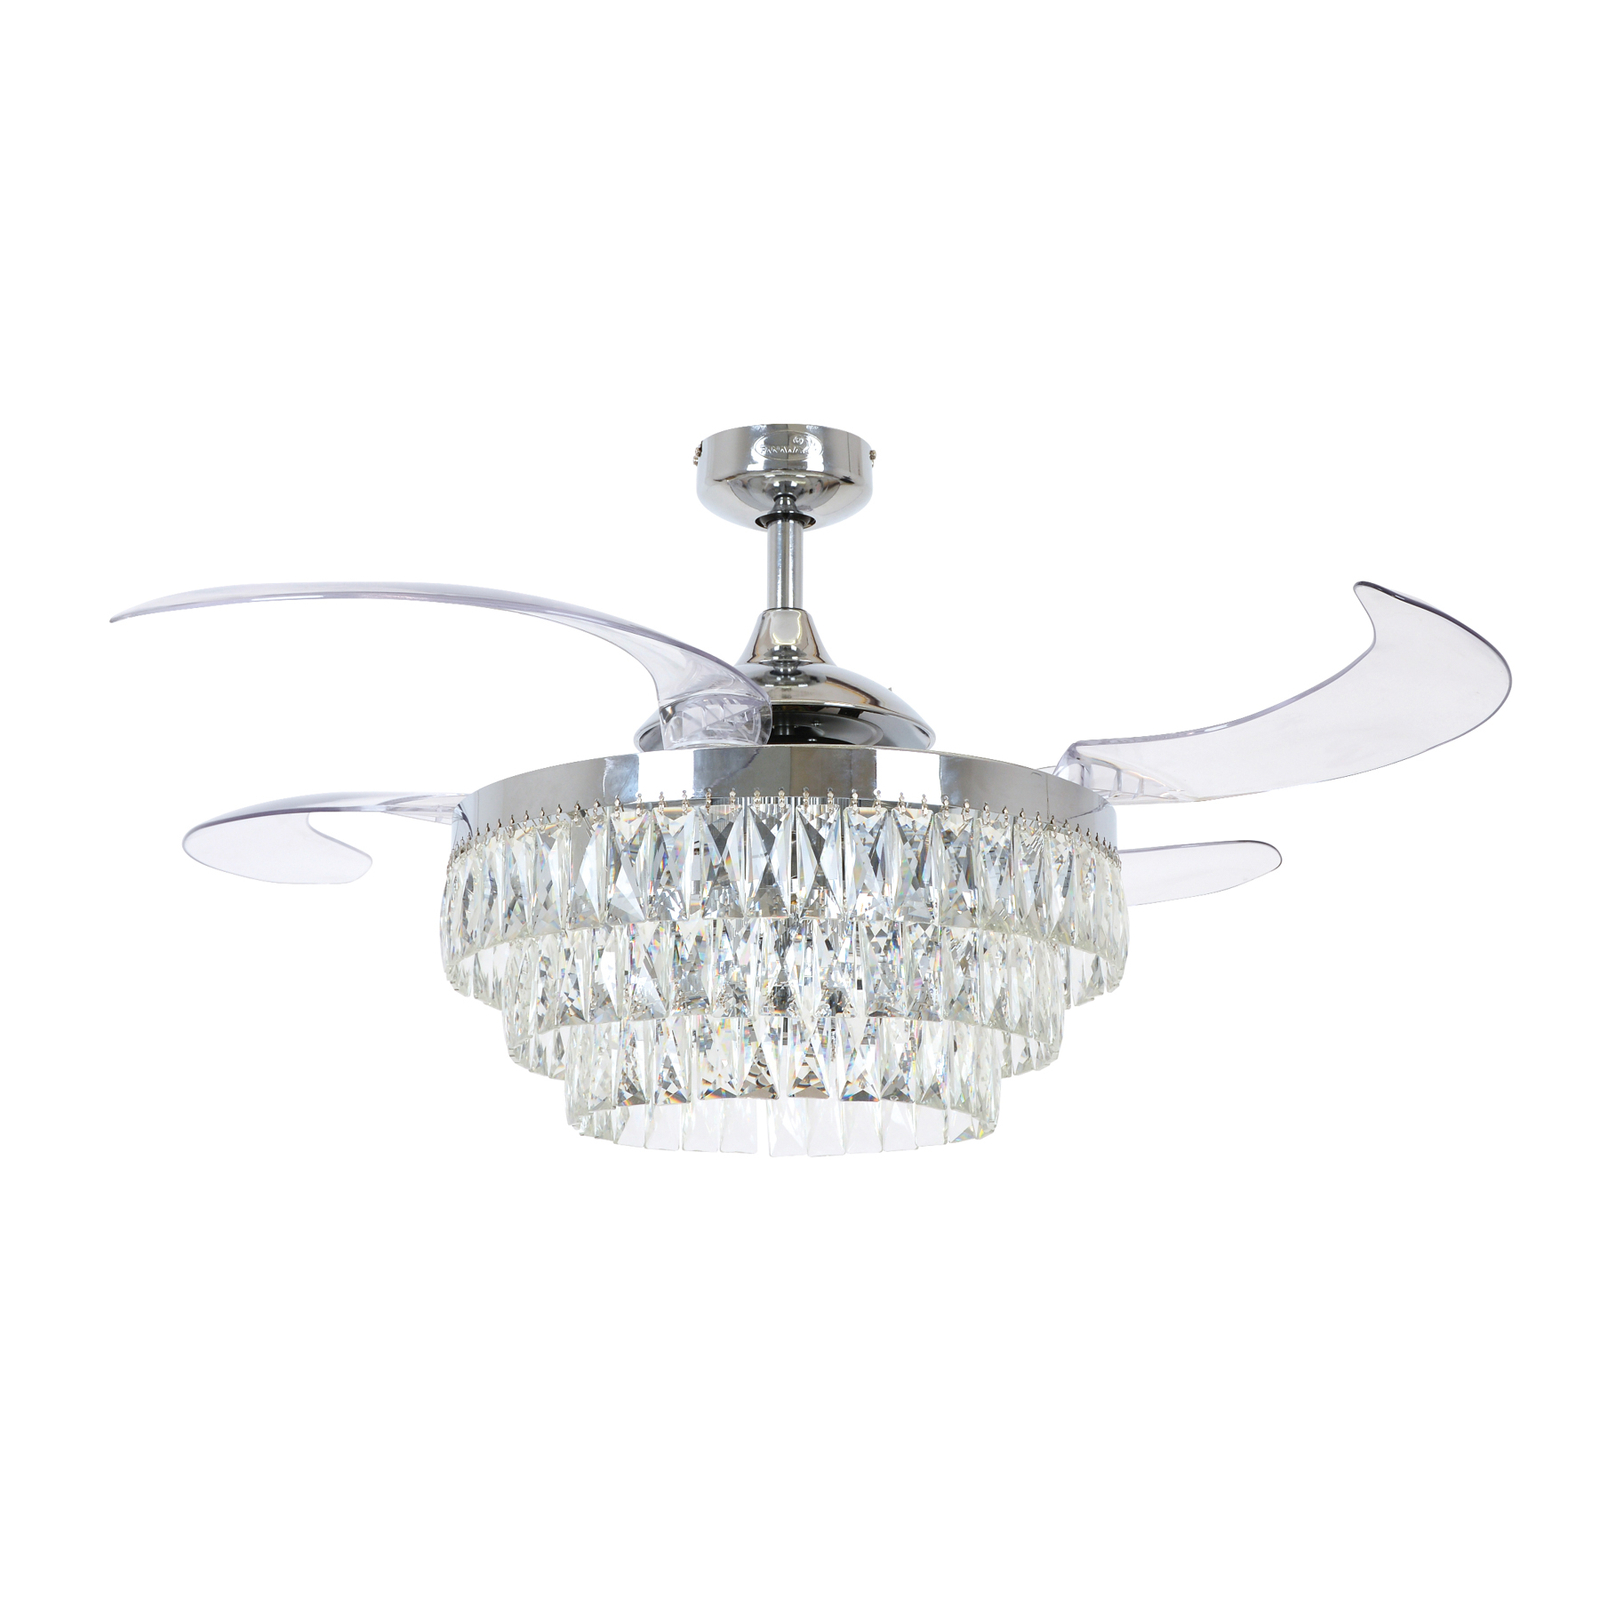 Beacon ceiling fan with light Fanaway Veil chrome silent